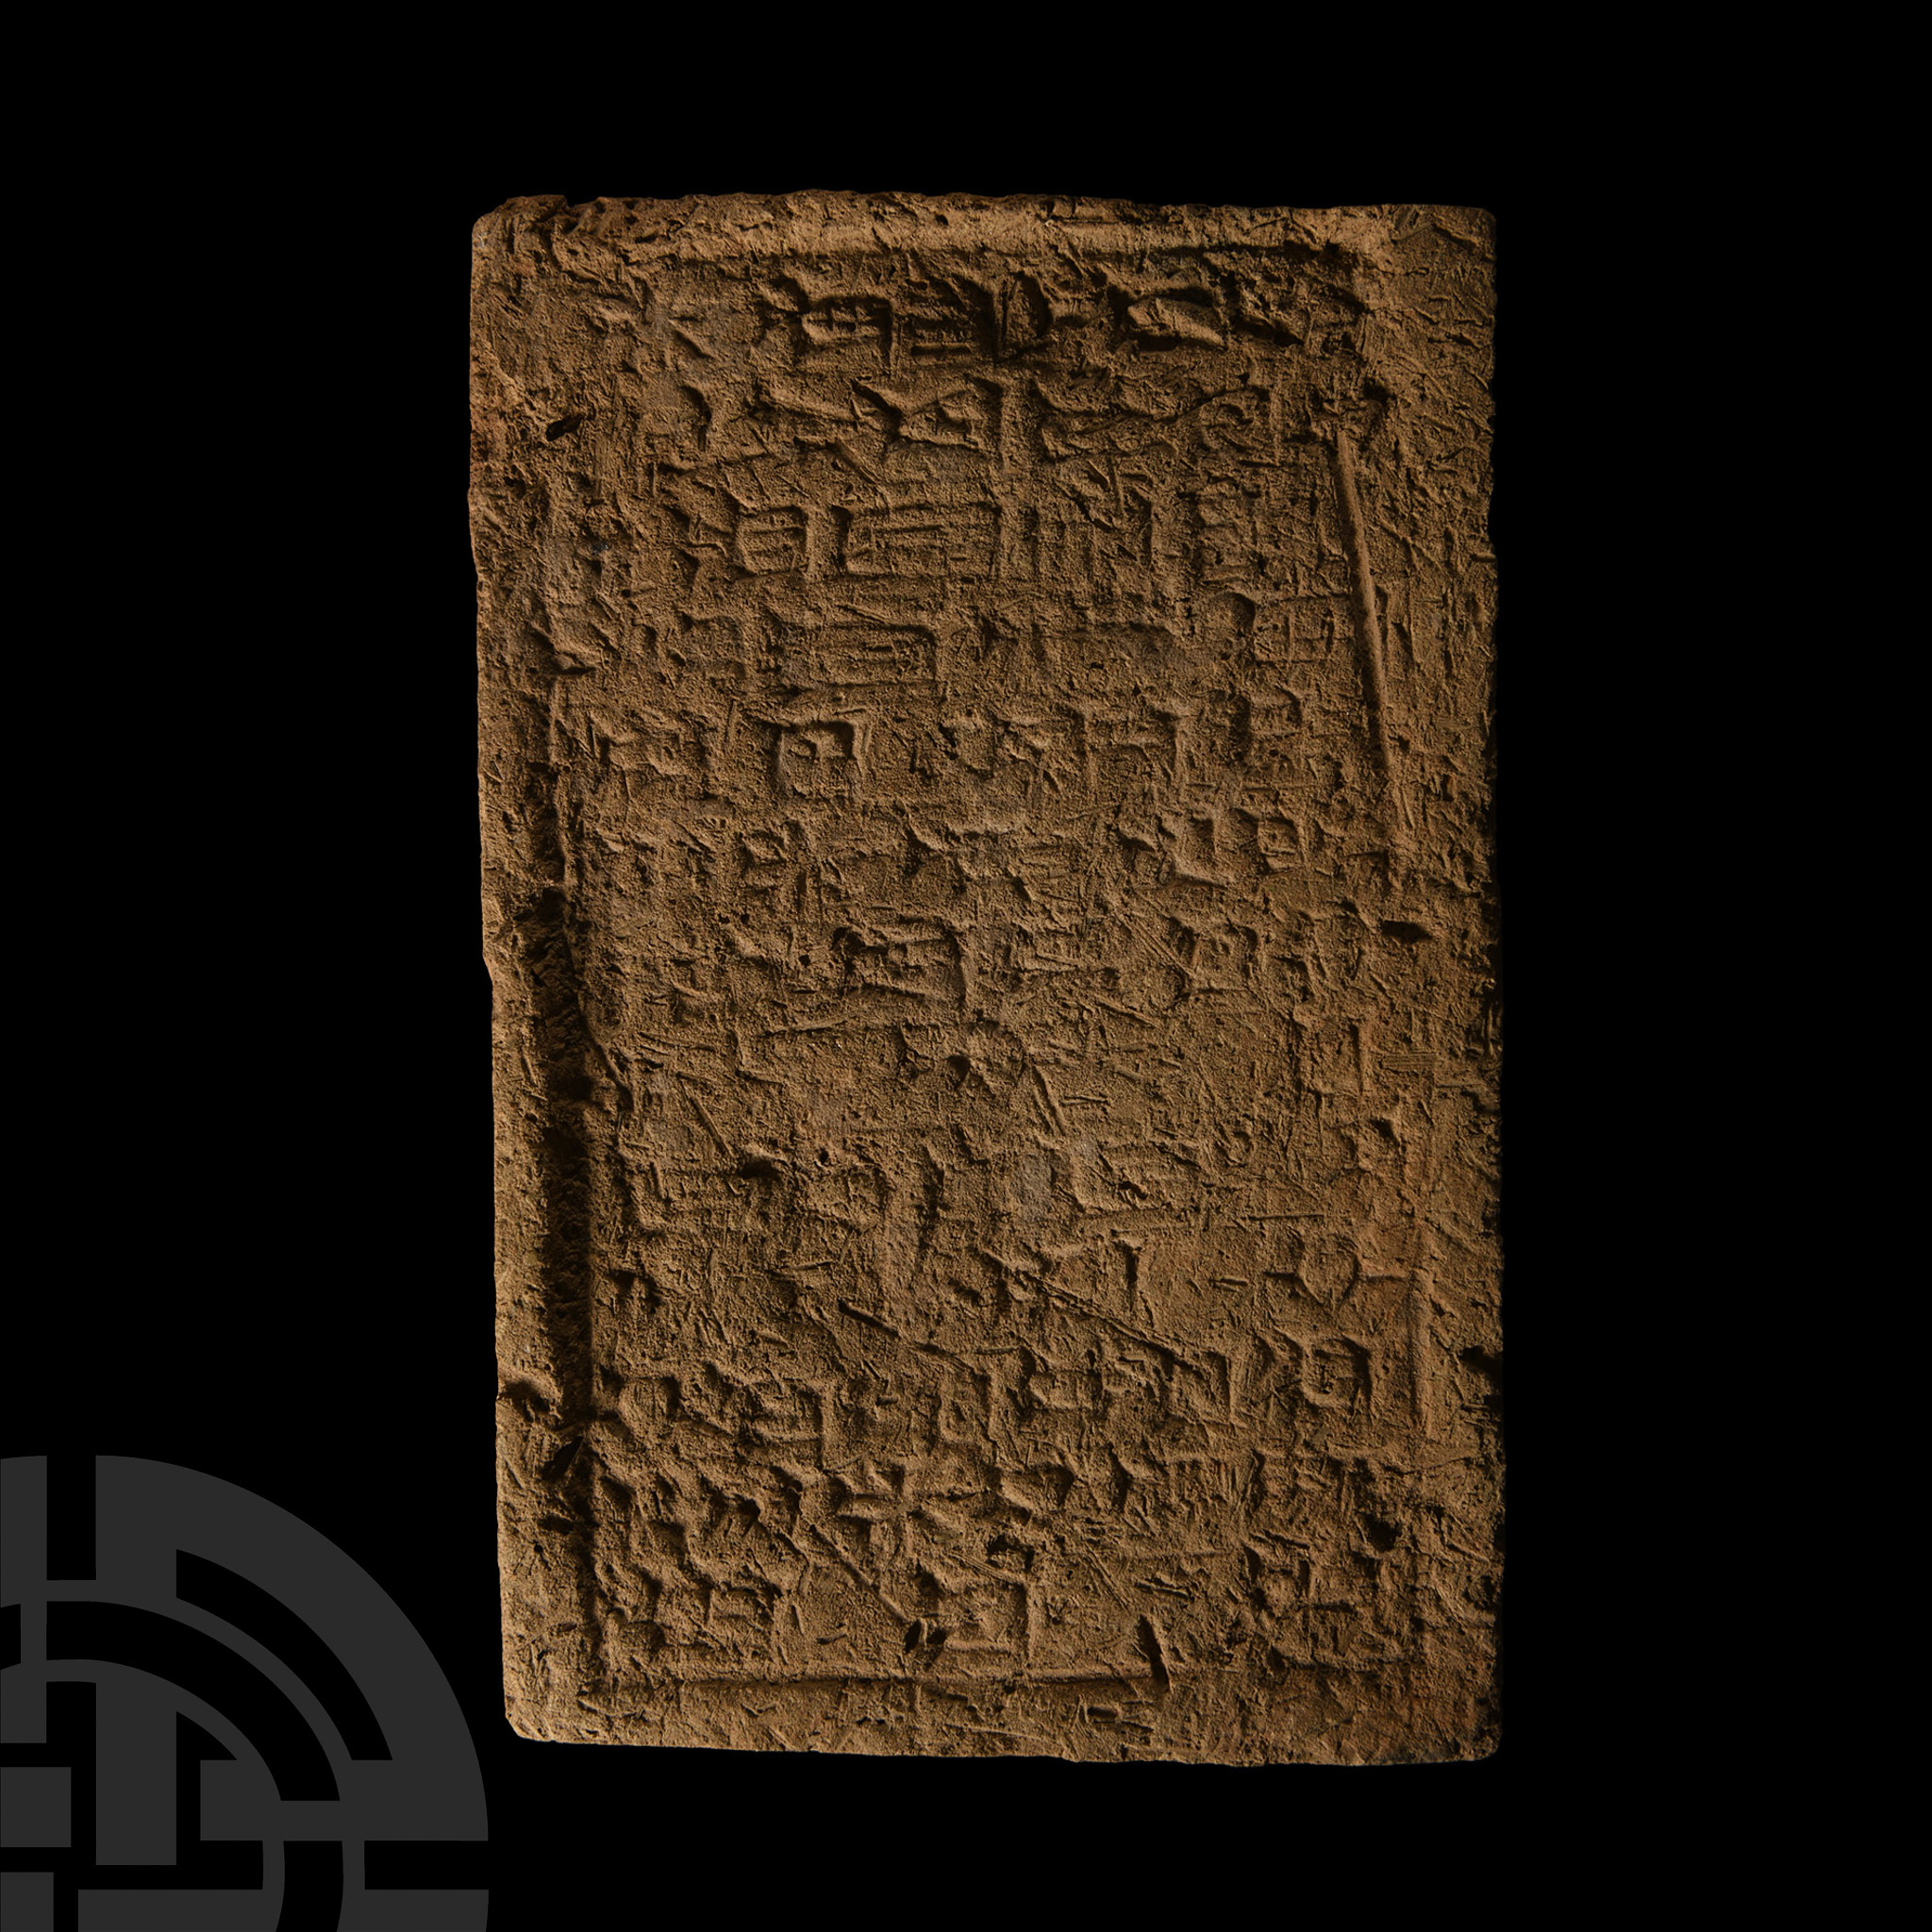 Temple Brick Section of Nebuchadnezzar II, King of Babylon